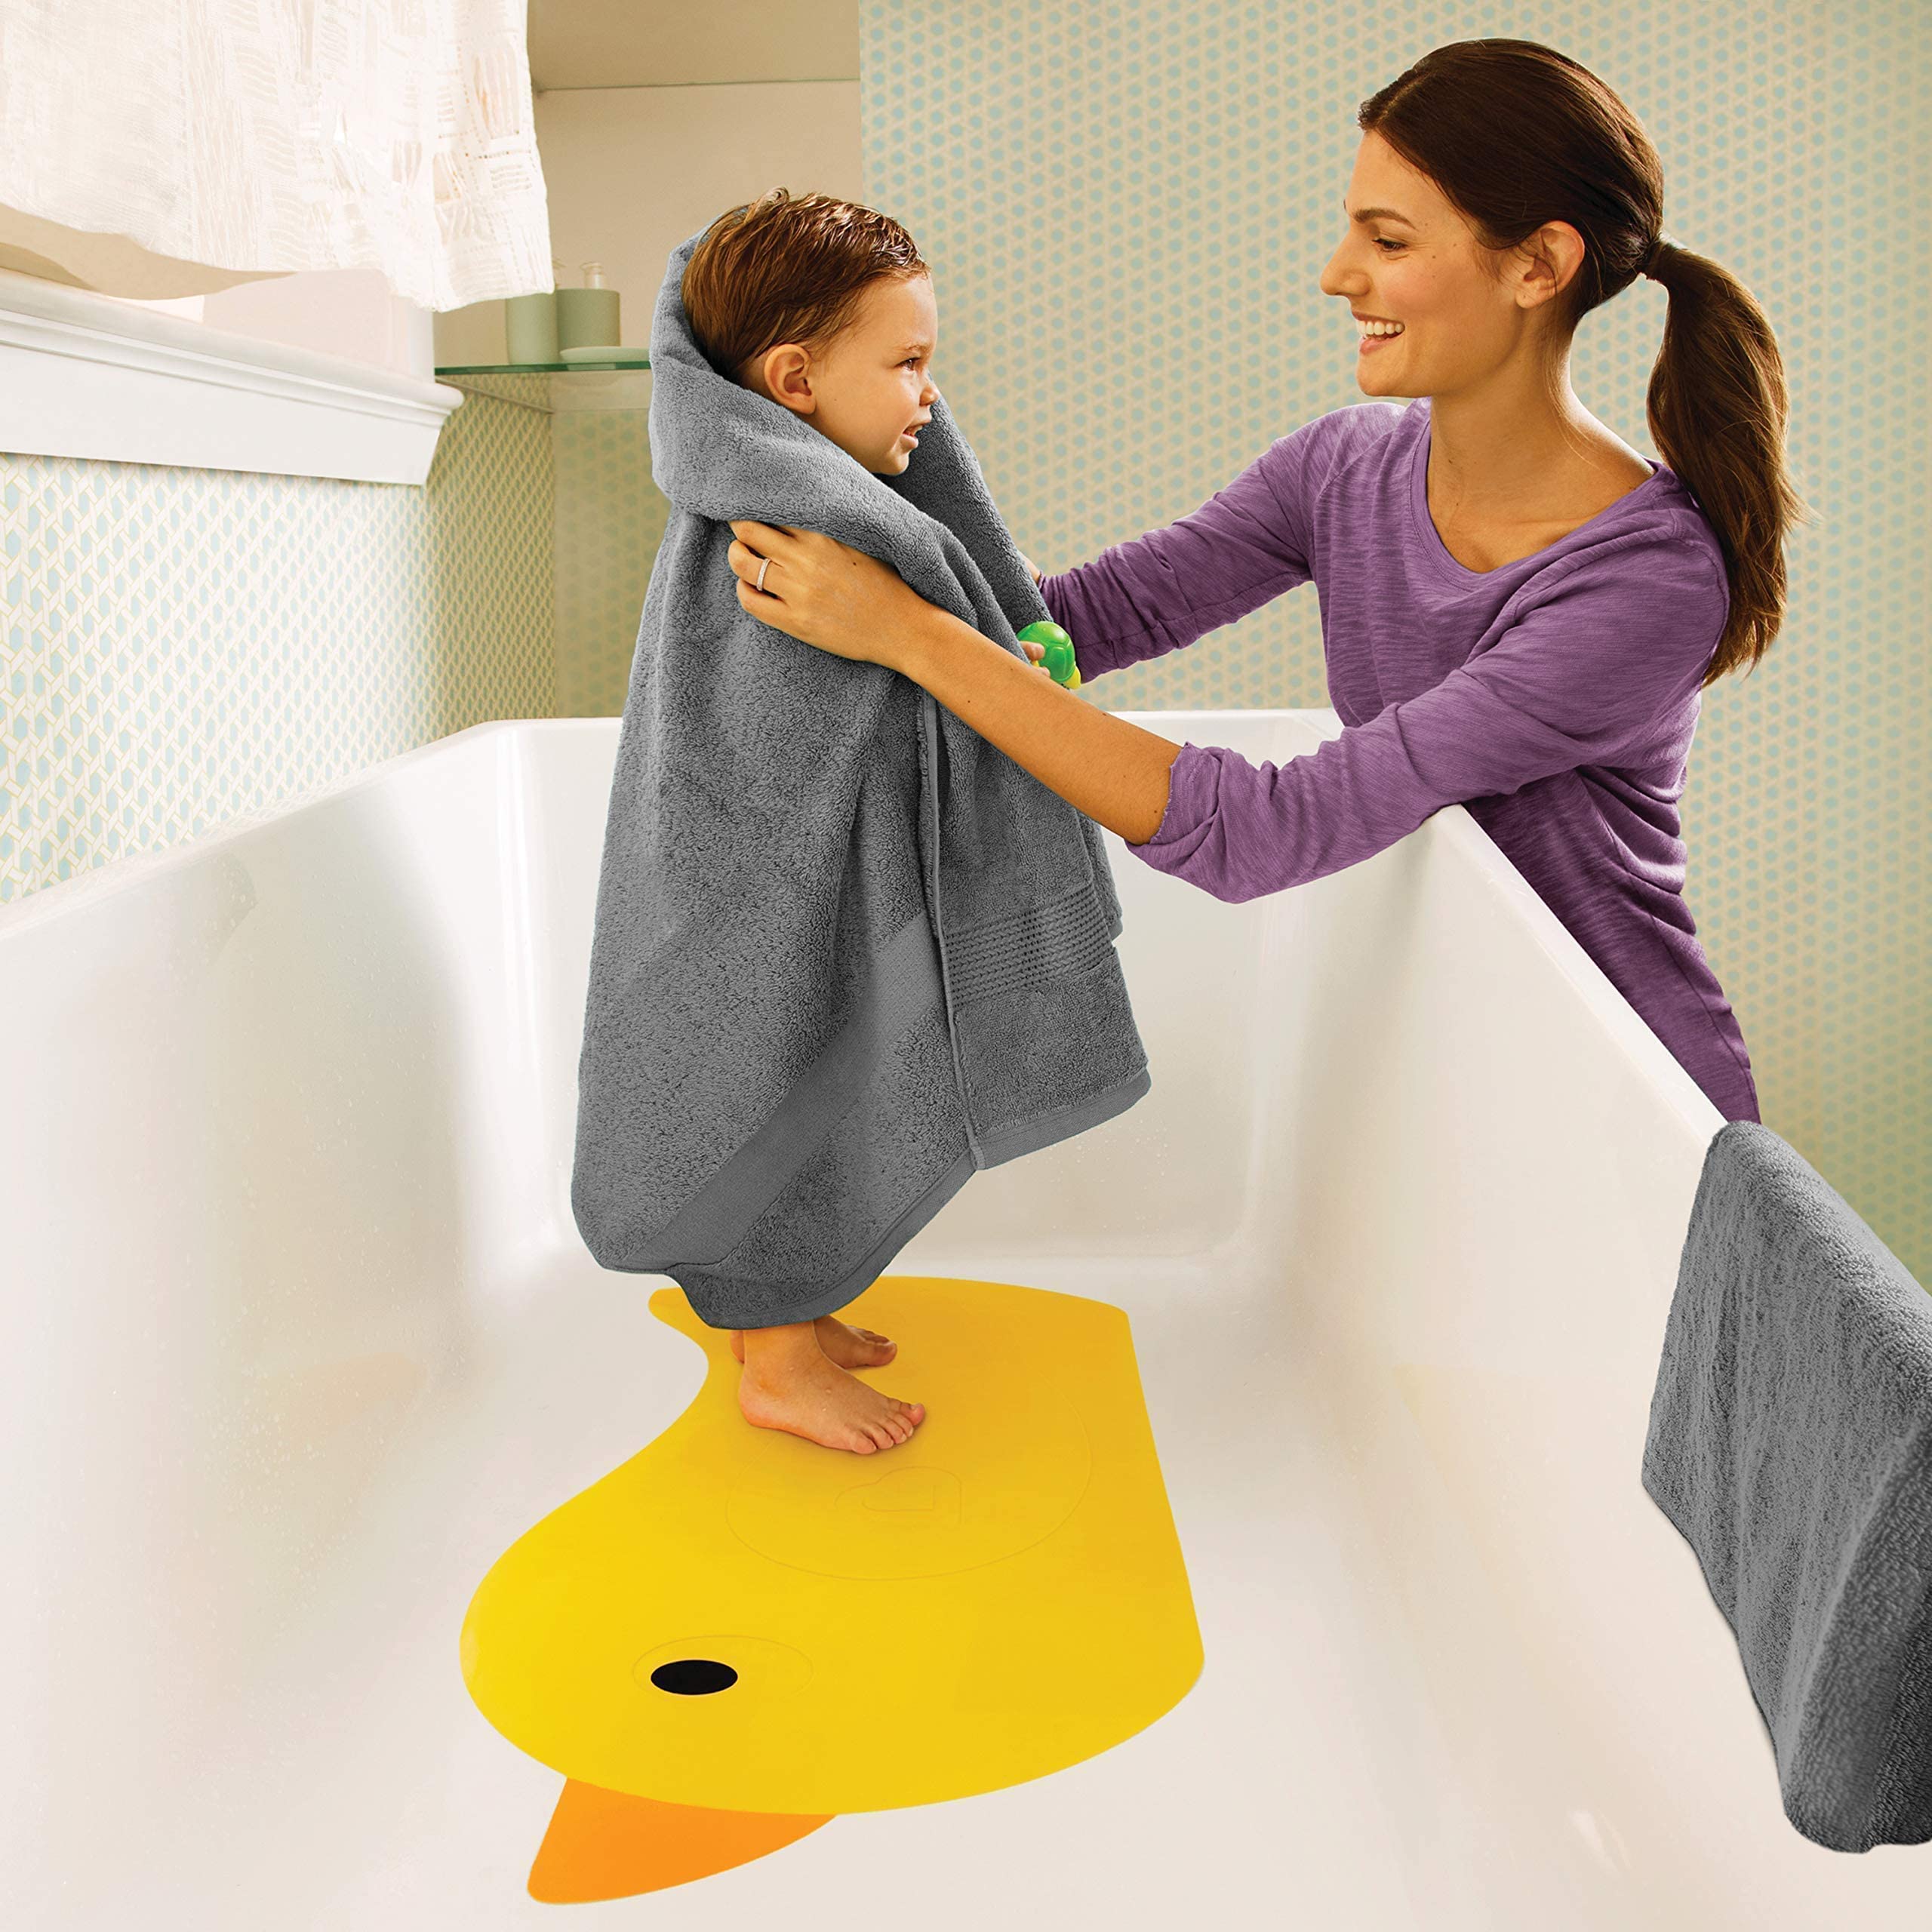 Munchkin® Quack™ Duck Bath Mat for Kids, Yellow